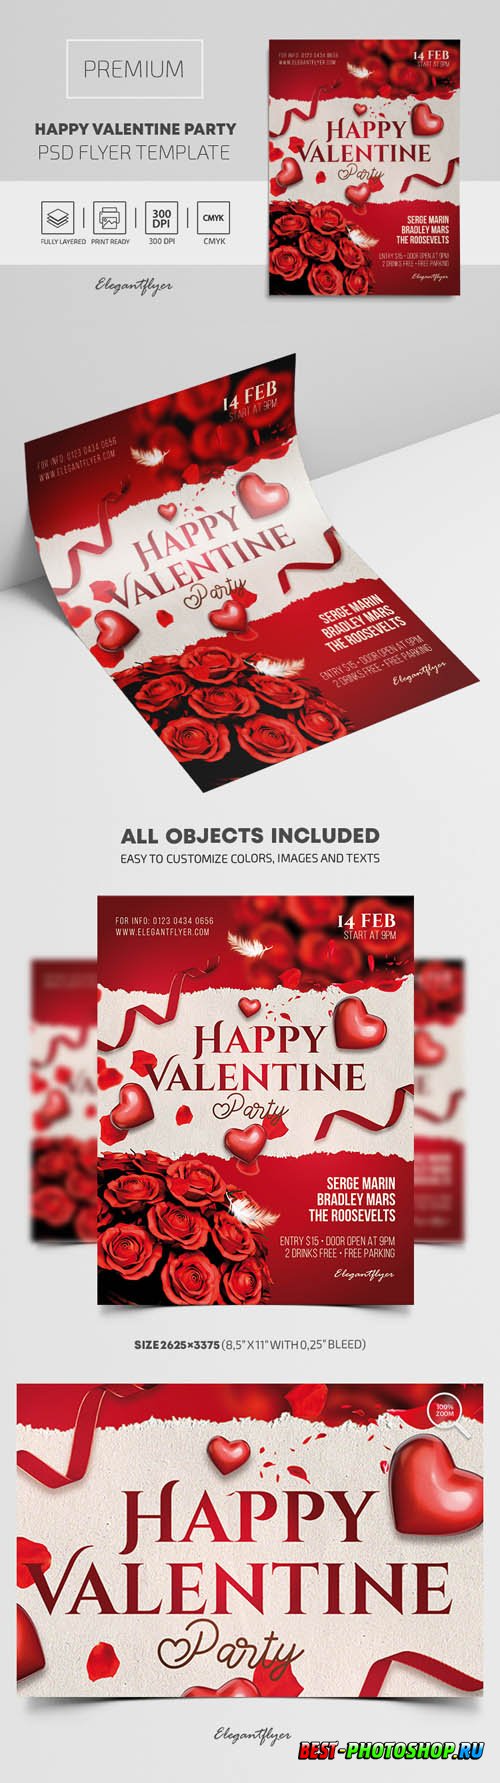 Happy Valentine Party Premium PSD Flyer Template